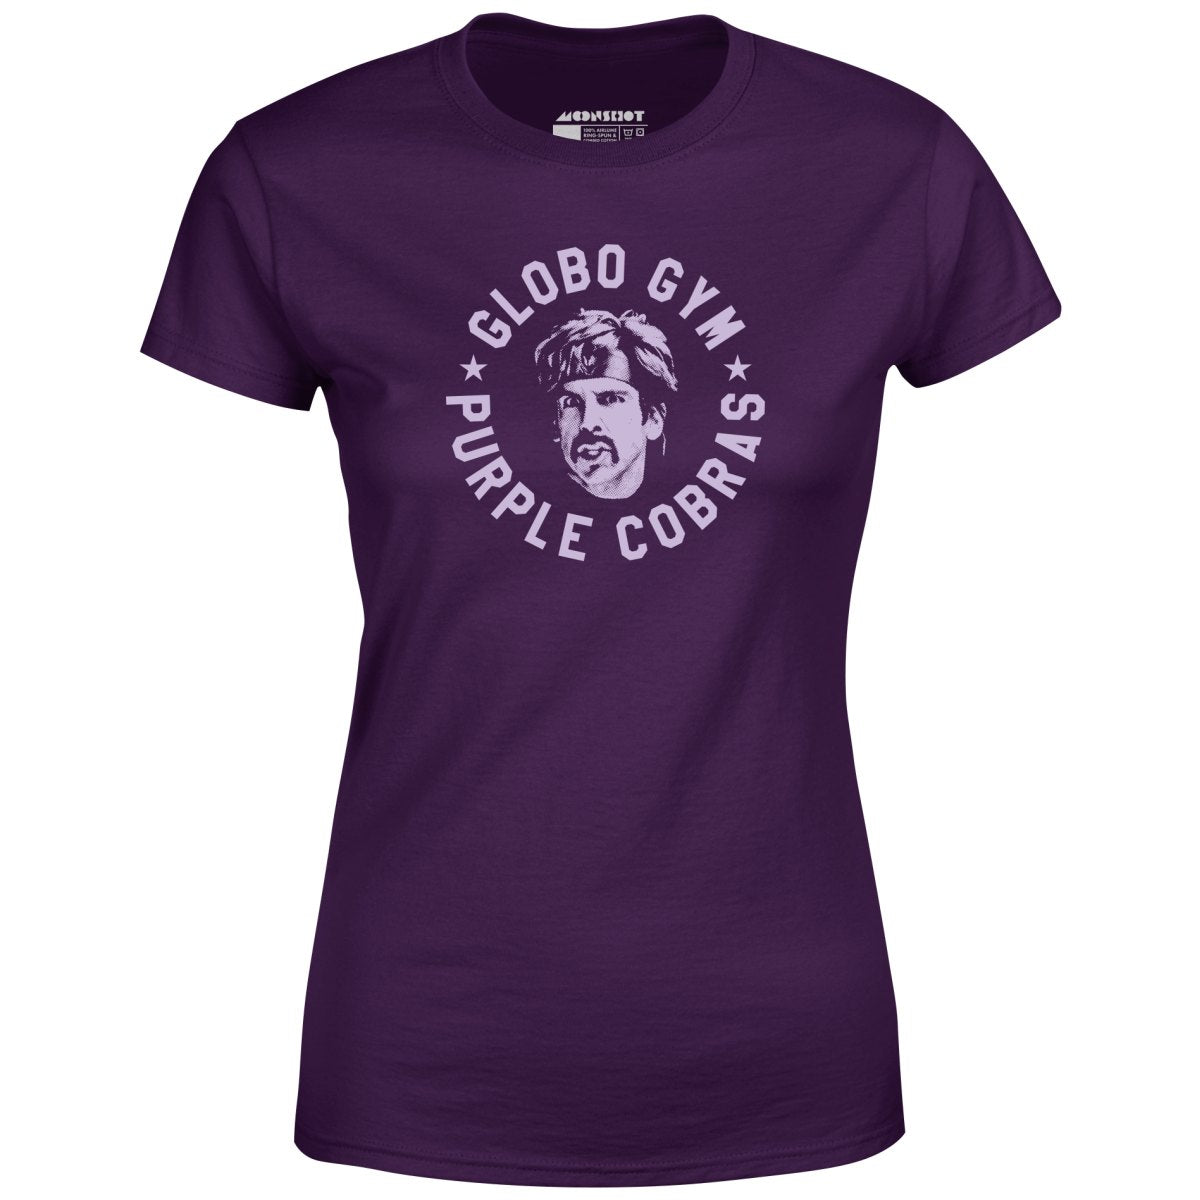 Globo Gym Purple Cobras - Women's T-Shirt